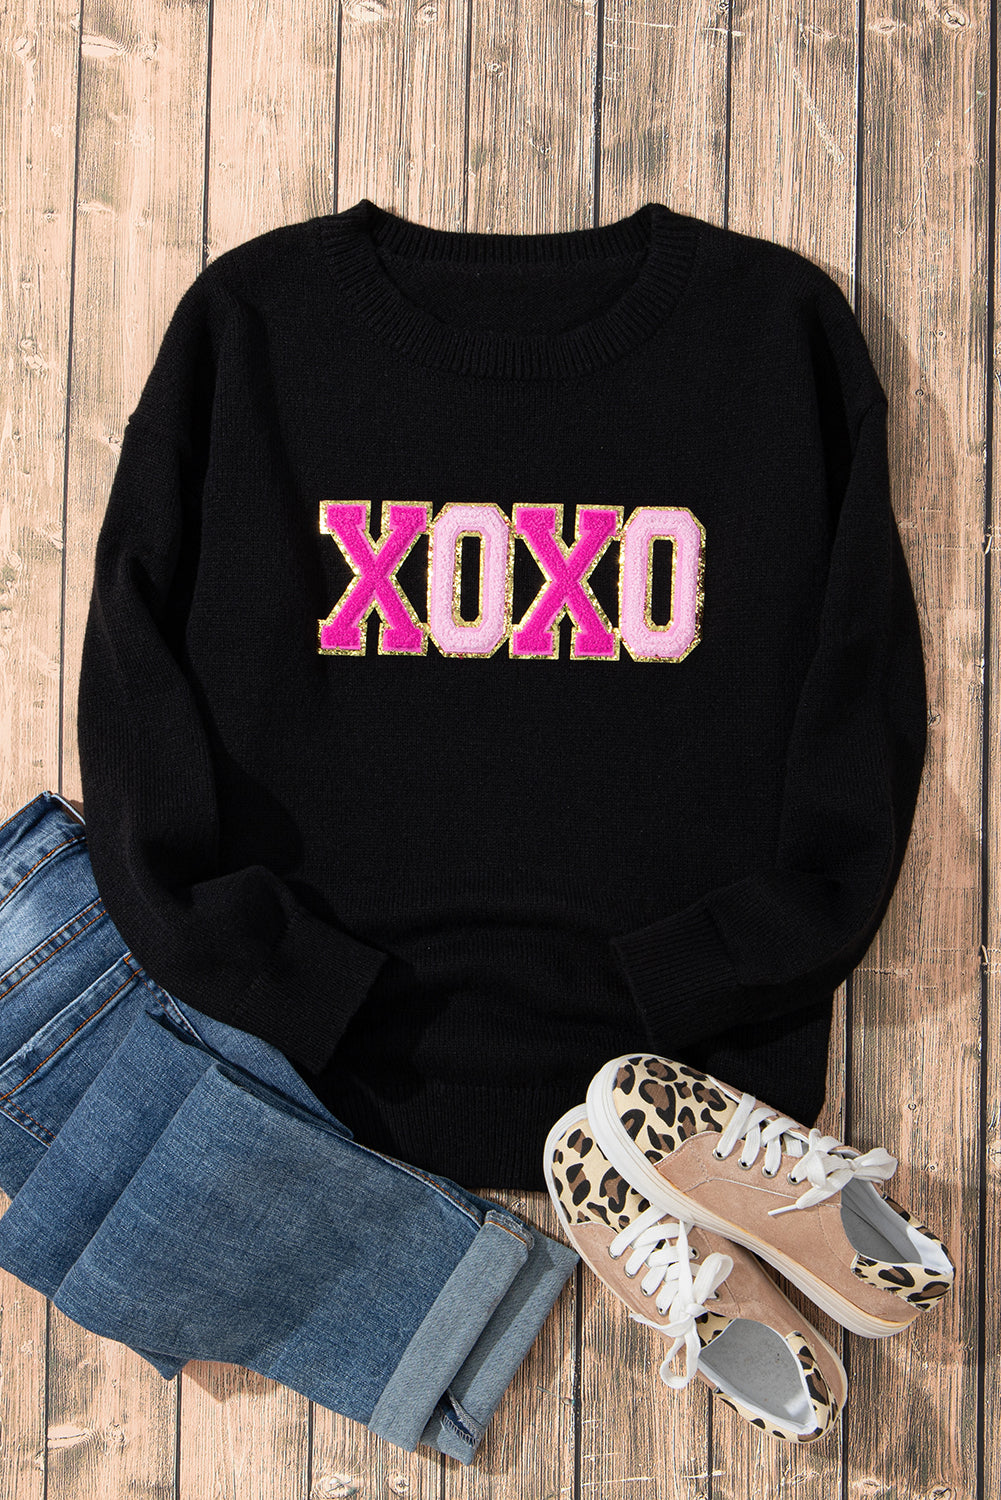 Rožnat pulover za prosti čas z okroglim izrezom v obliki srčka